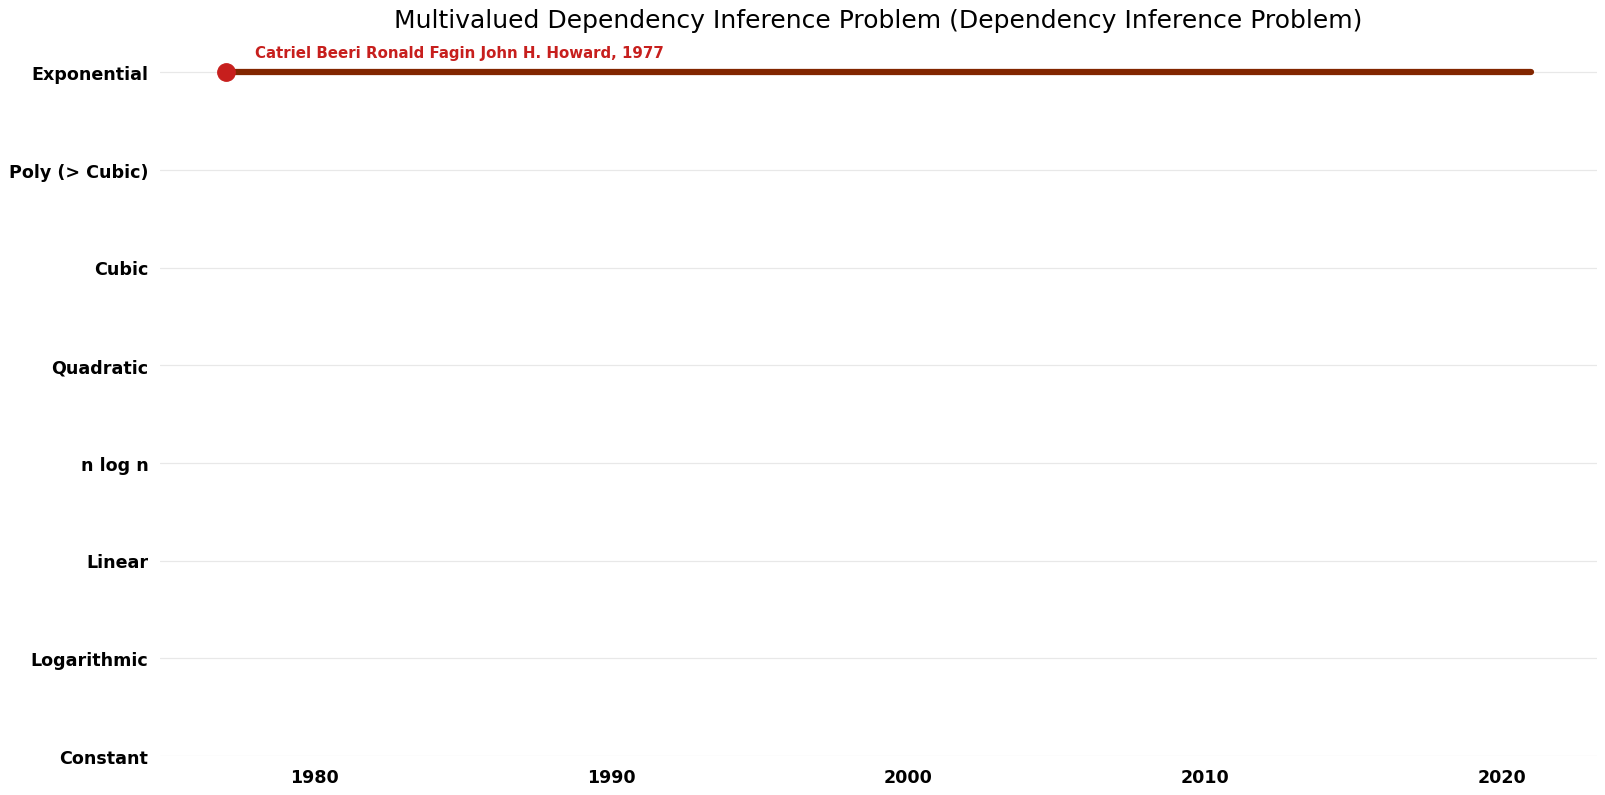 File:Dependency Inference Problem - Multivalued Dependency Inference Problem - Time.png